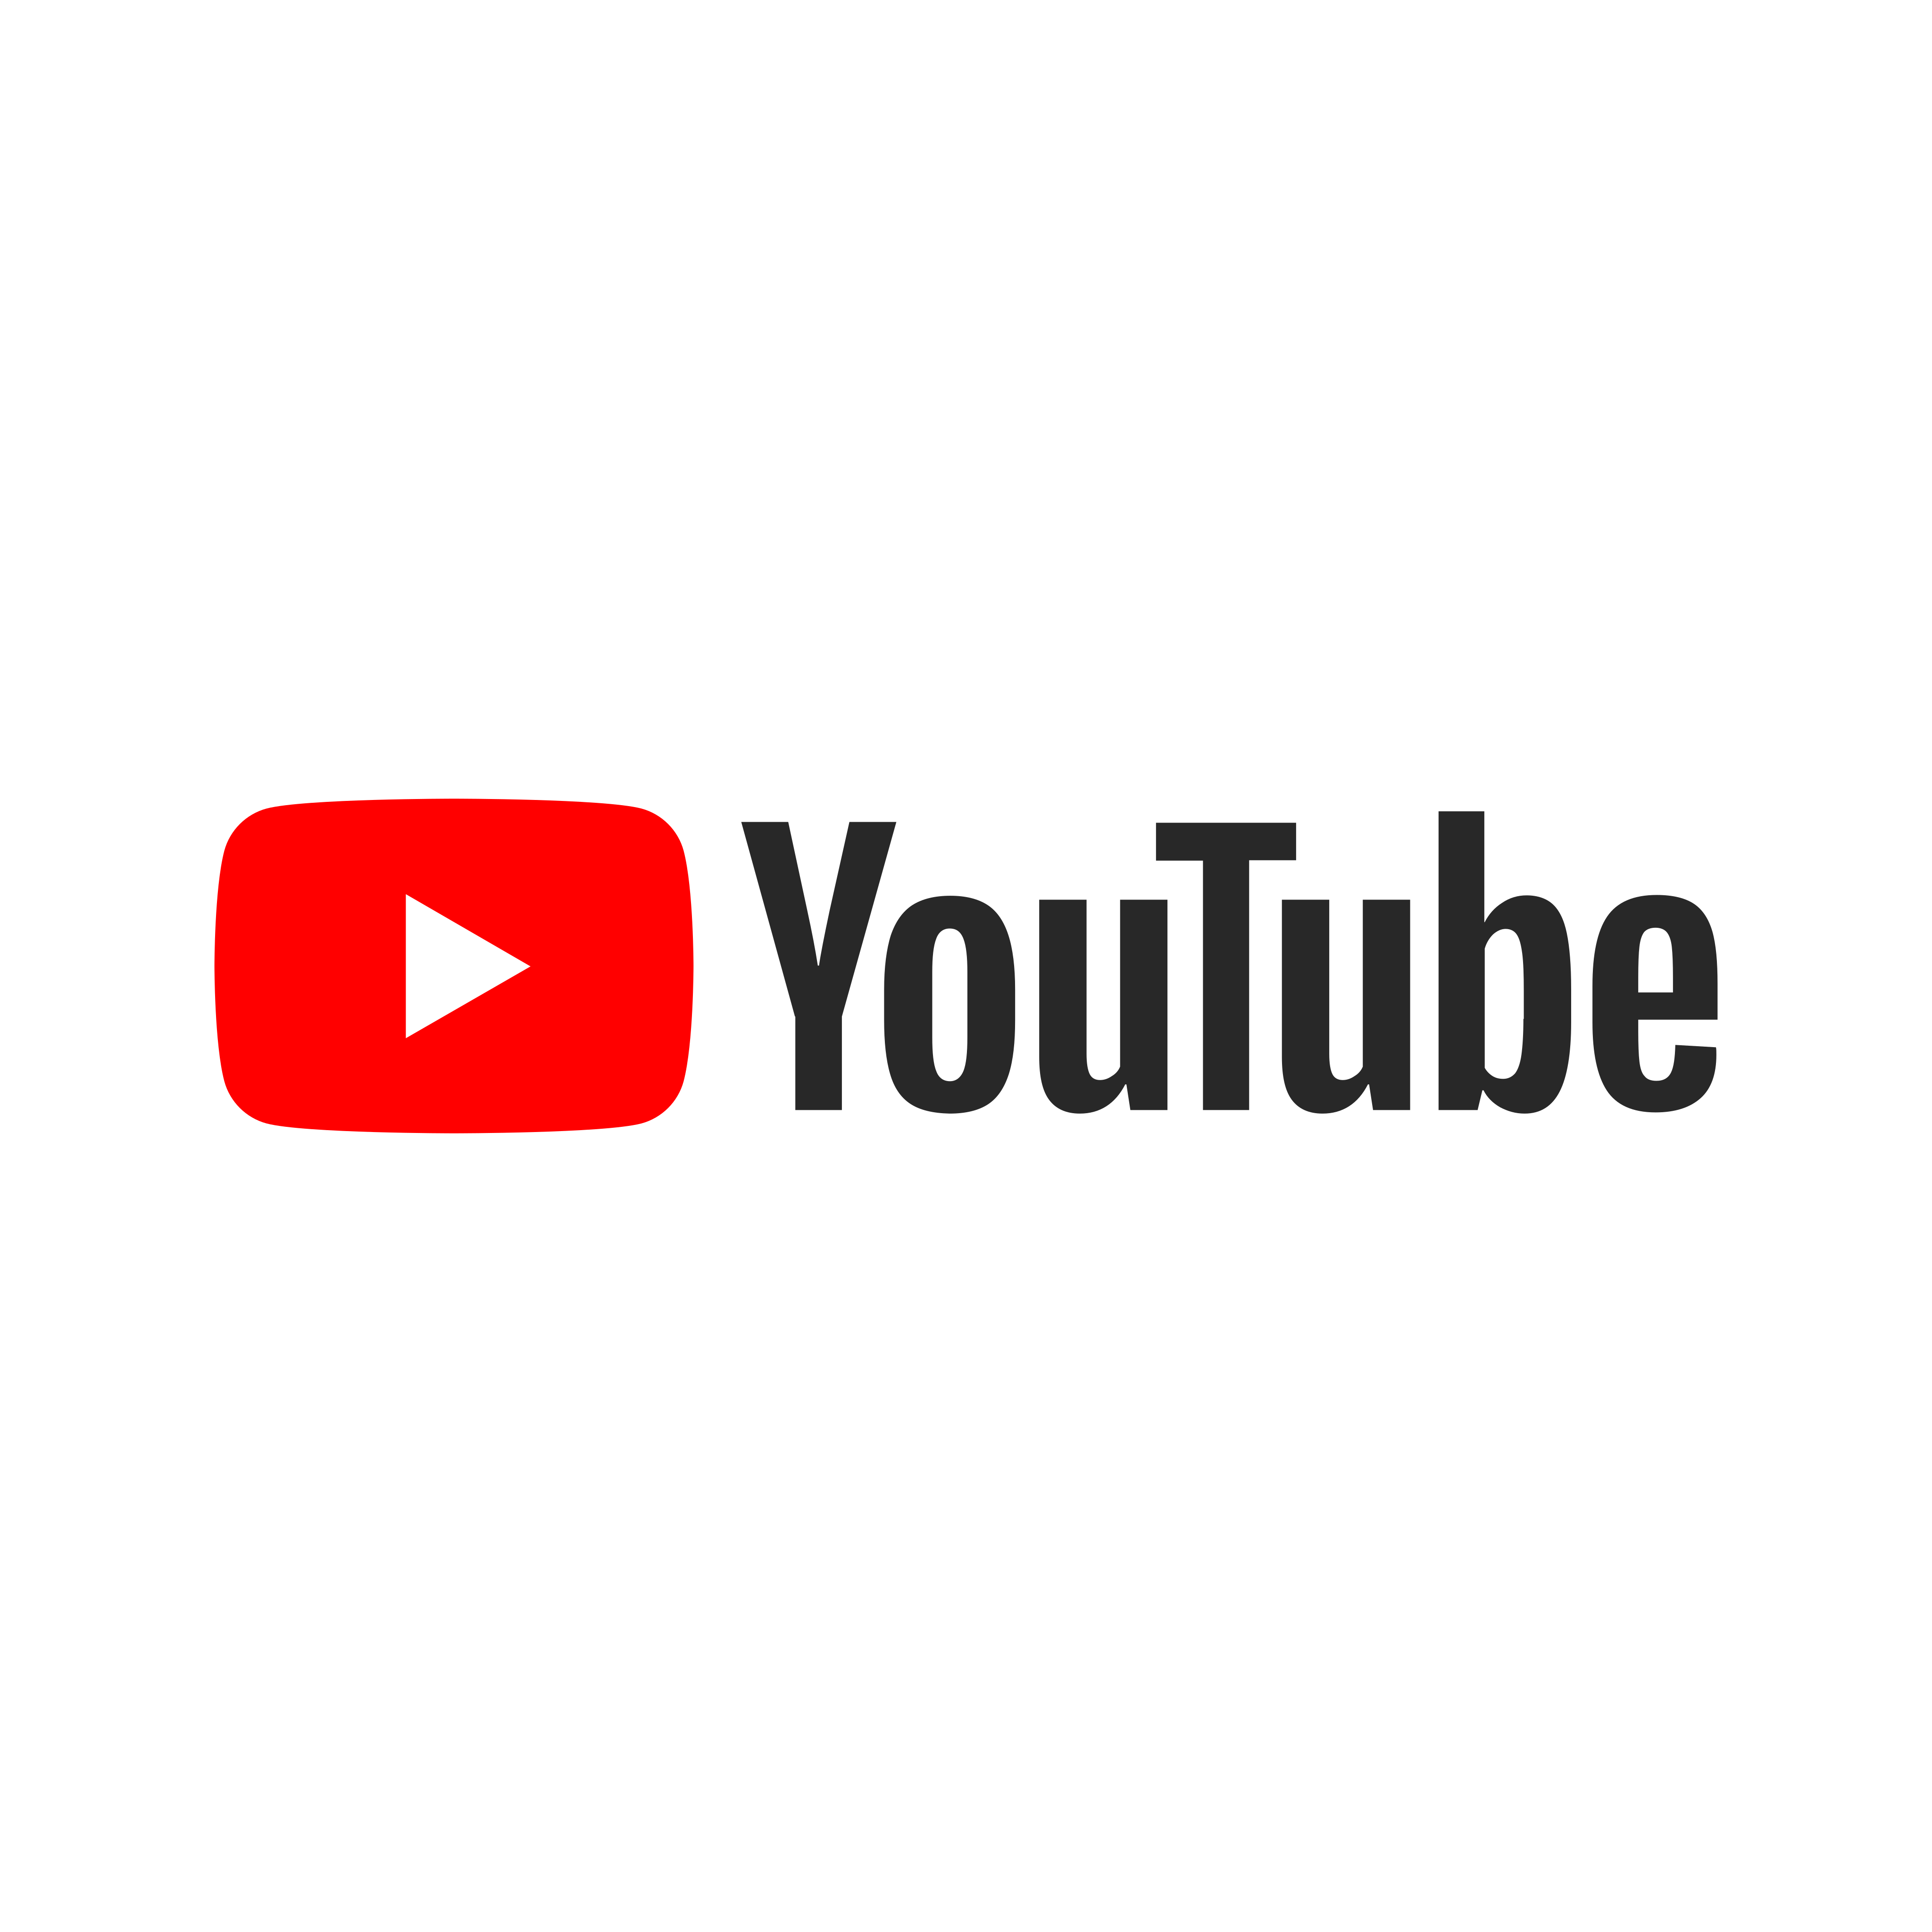 Youtube Logo PNG.